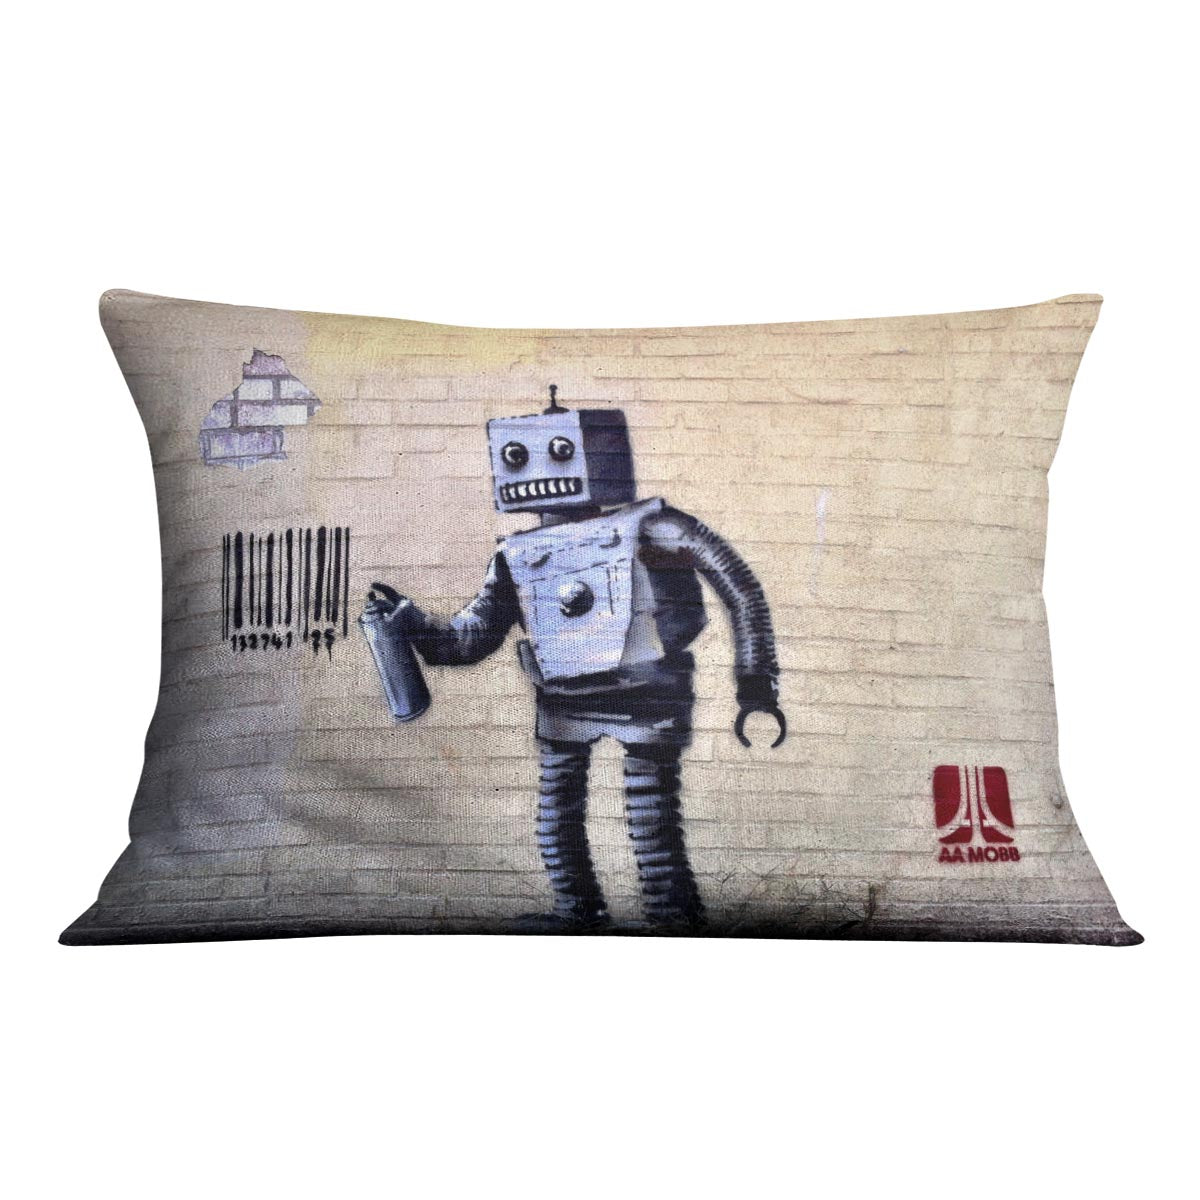 Banksy Robot Cushion